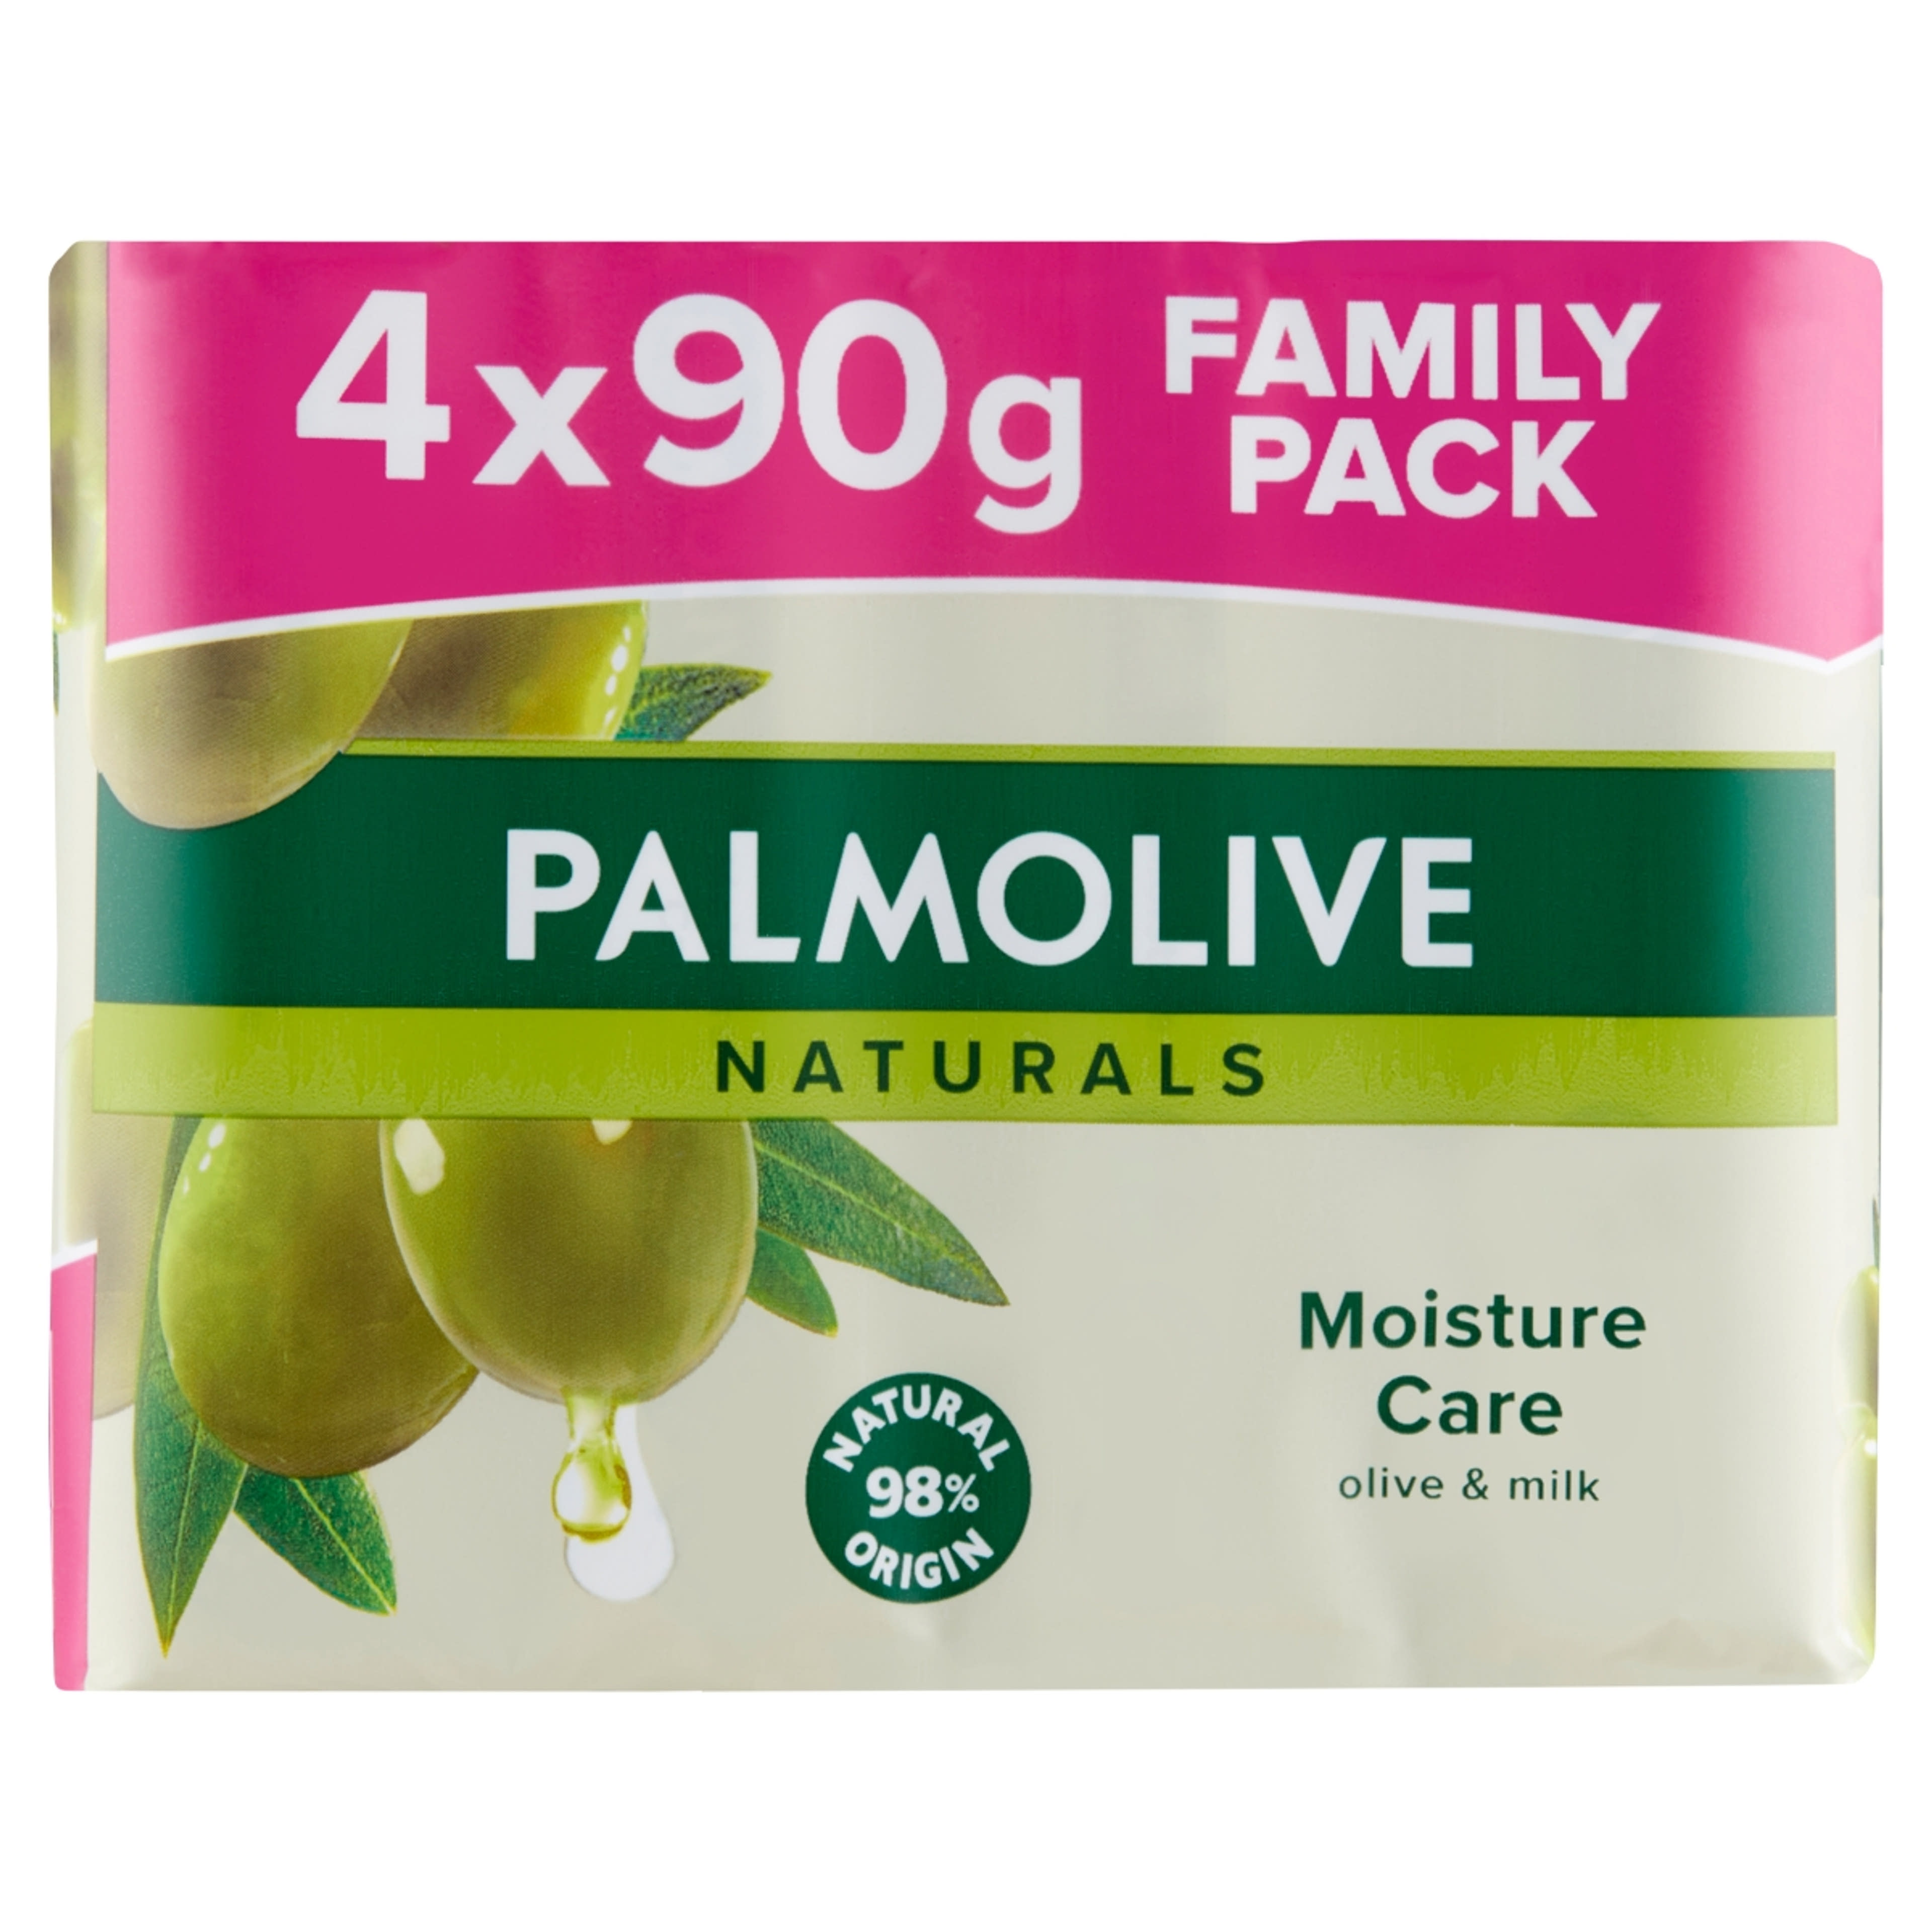 Palmolive Naturals Moisture Care pipereszappan olíva kivonattal - 4 x 90 g-1